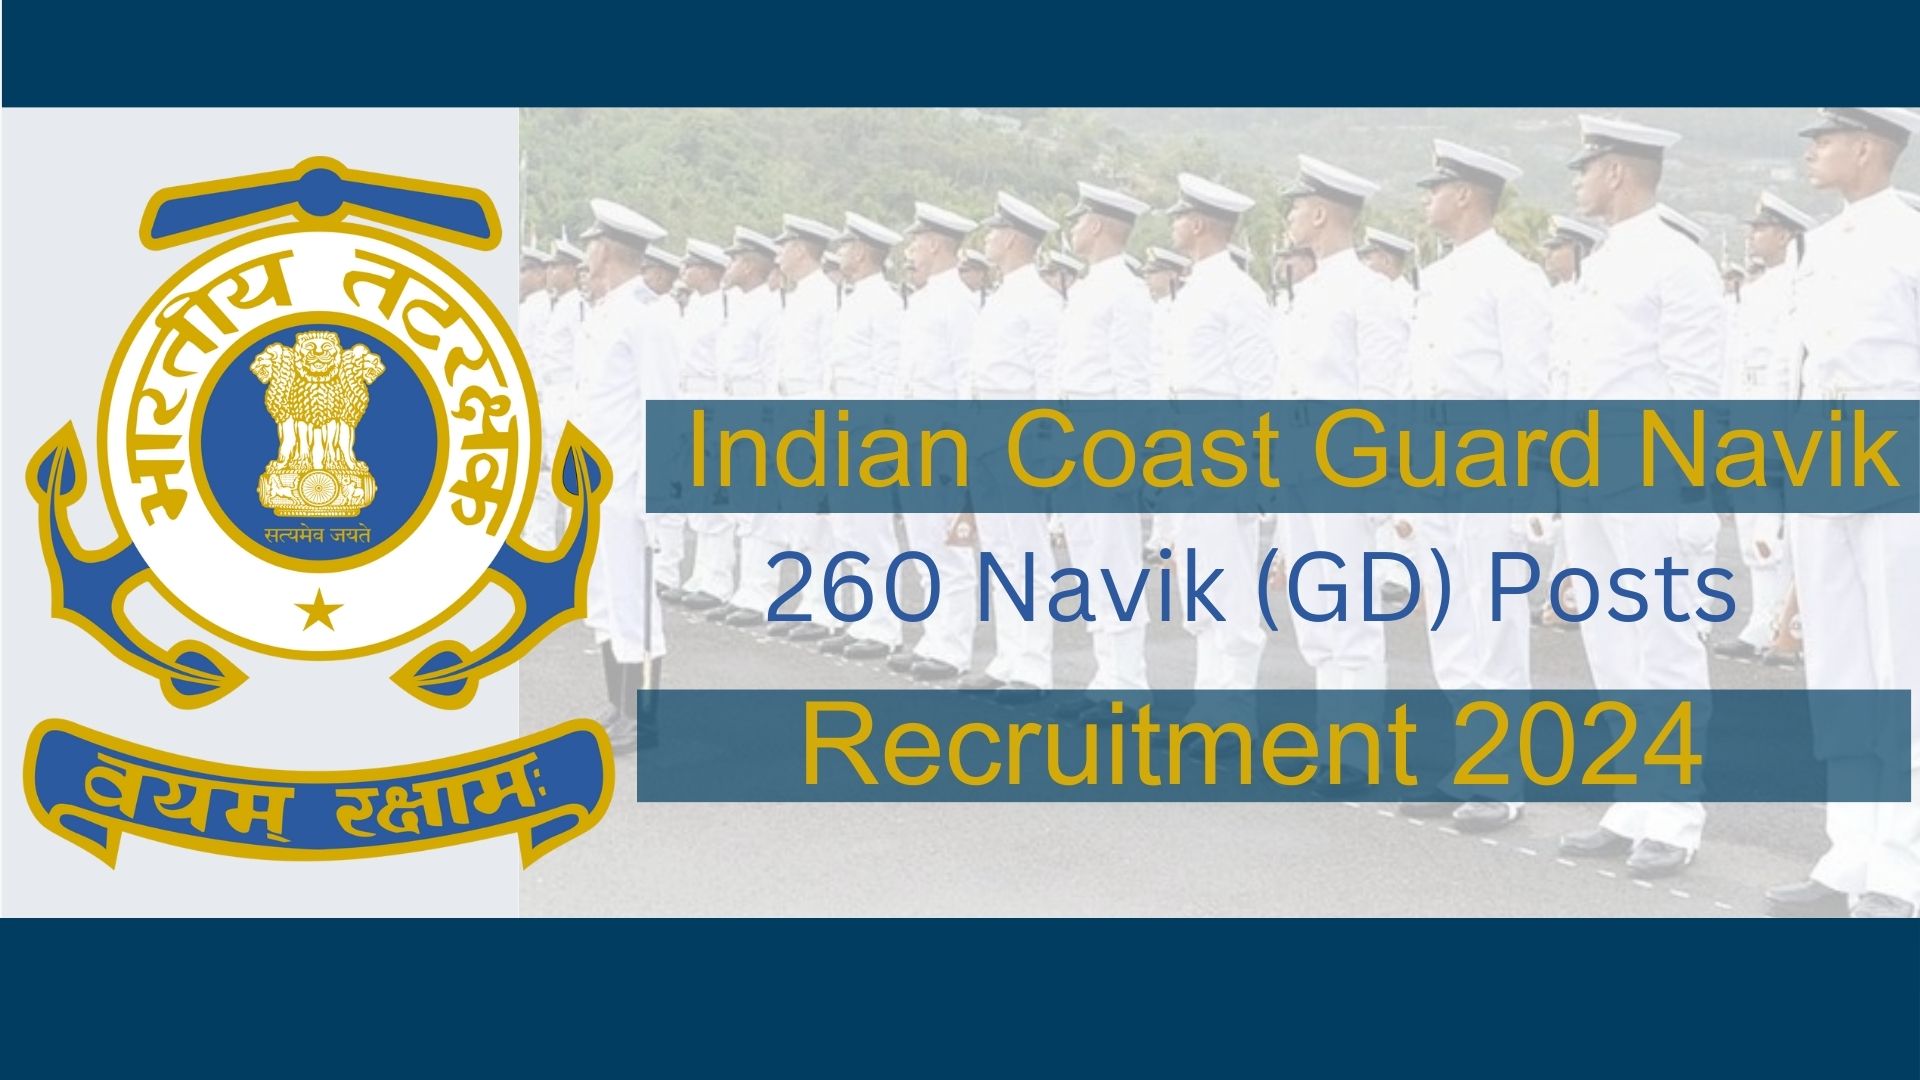 Indian-Coast-Guard-Navik-Recruitment-2024-Notification-out-for-260-Navik-(GD)-Posts-